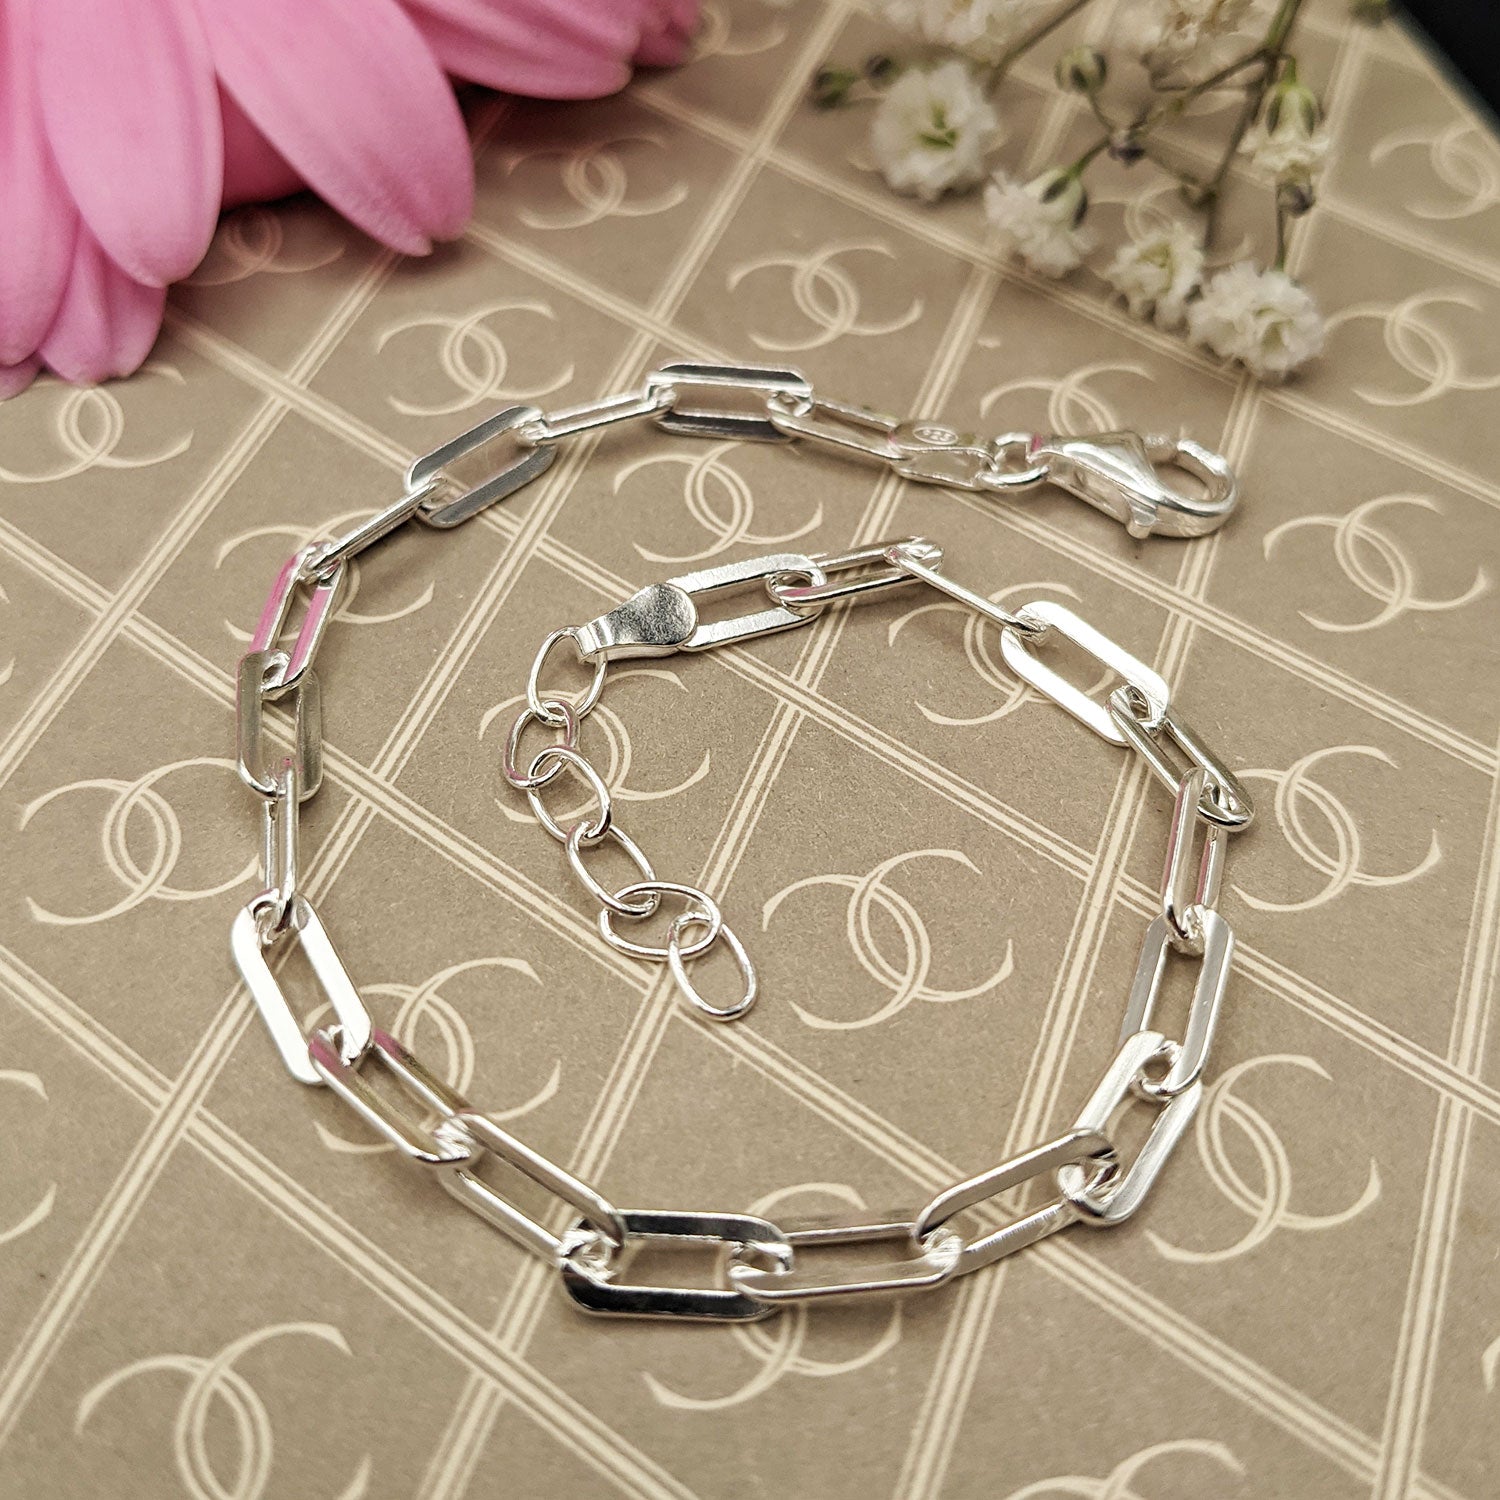 silver bracelet for 7 - 8 inch wrists